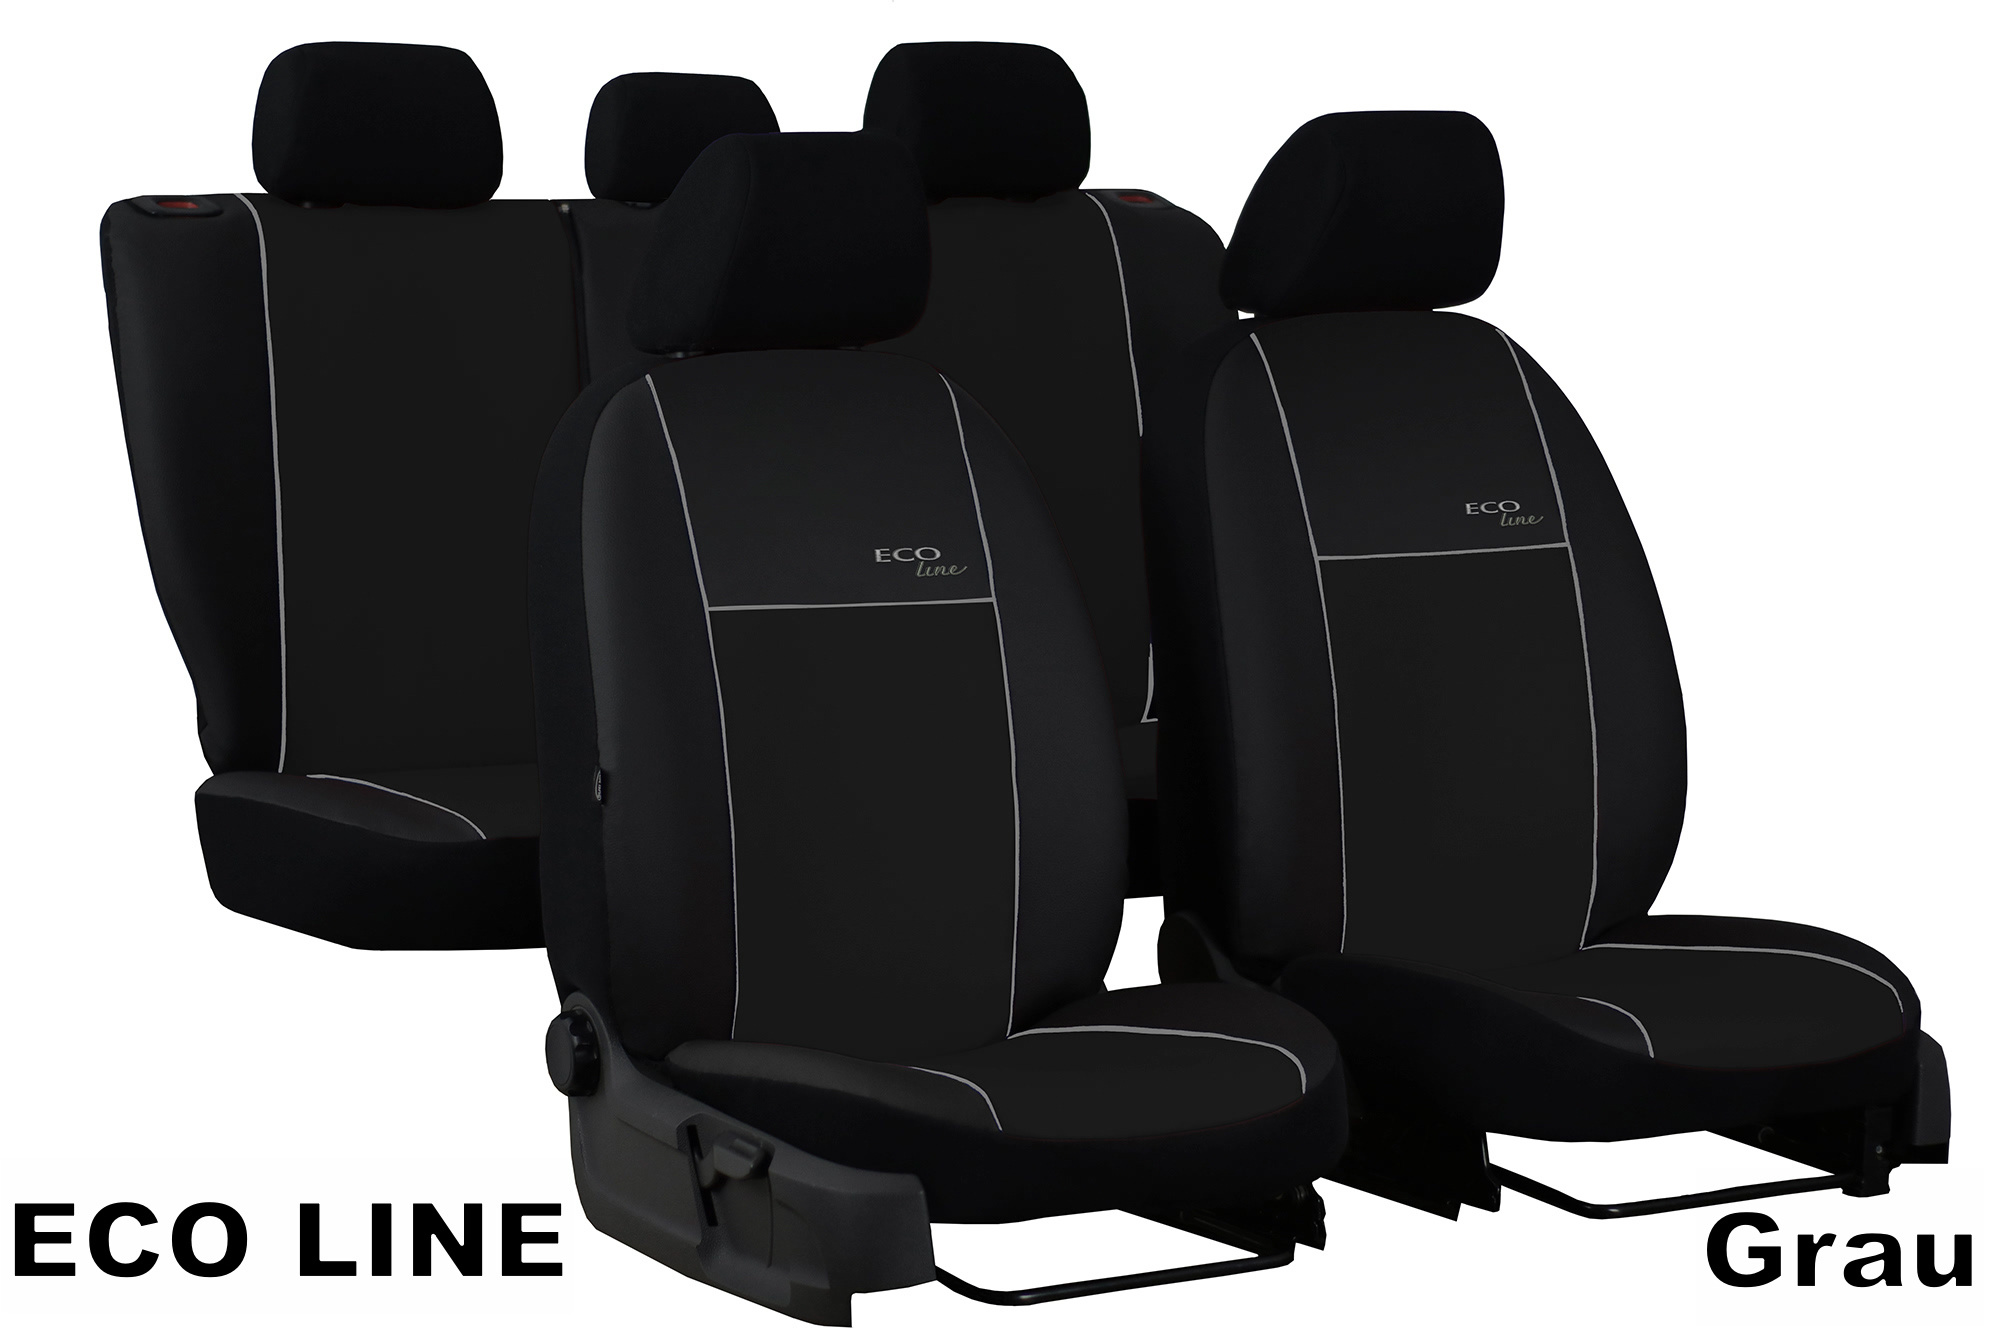 Maßgenauer Sitzbezug S-Type für Kia Sportage Sorento - Maluch